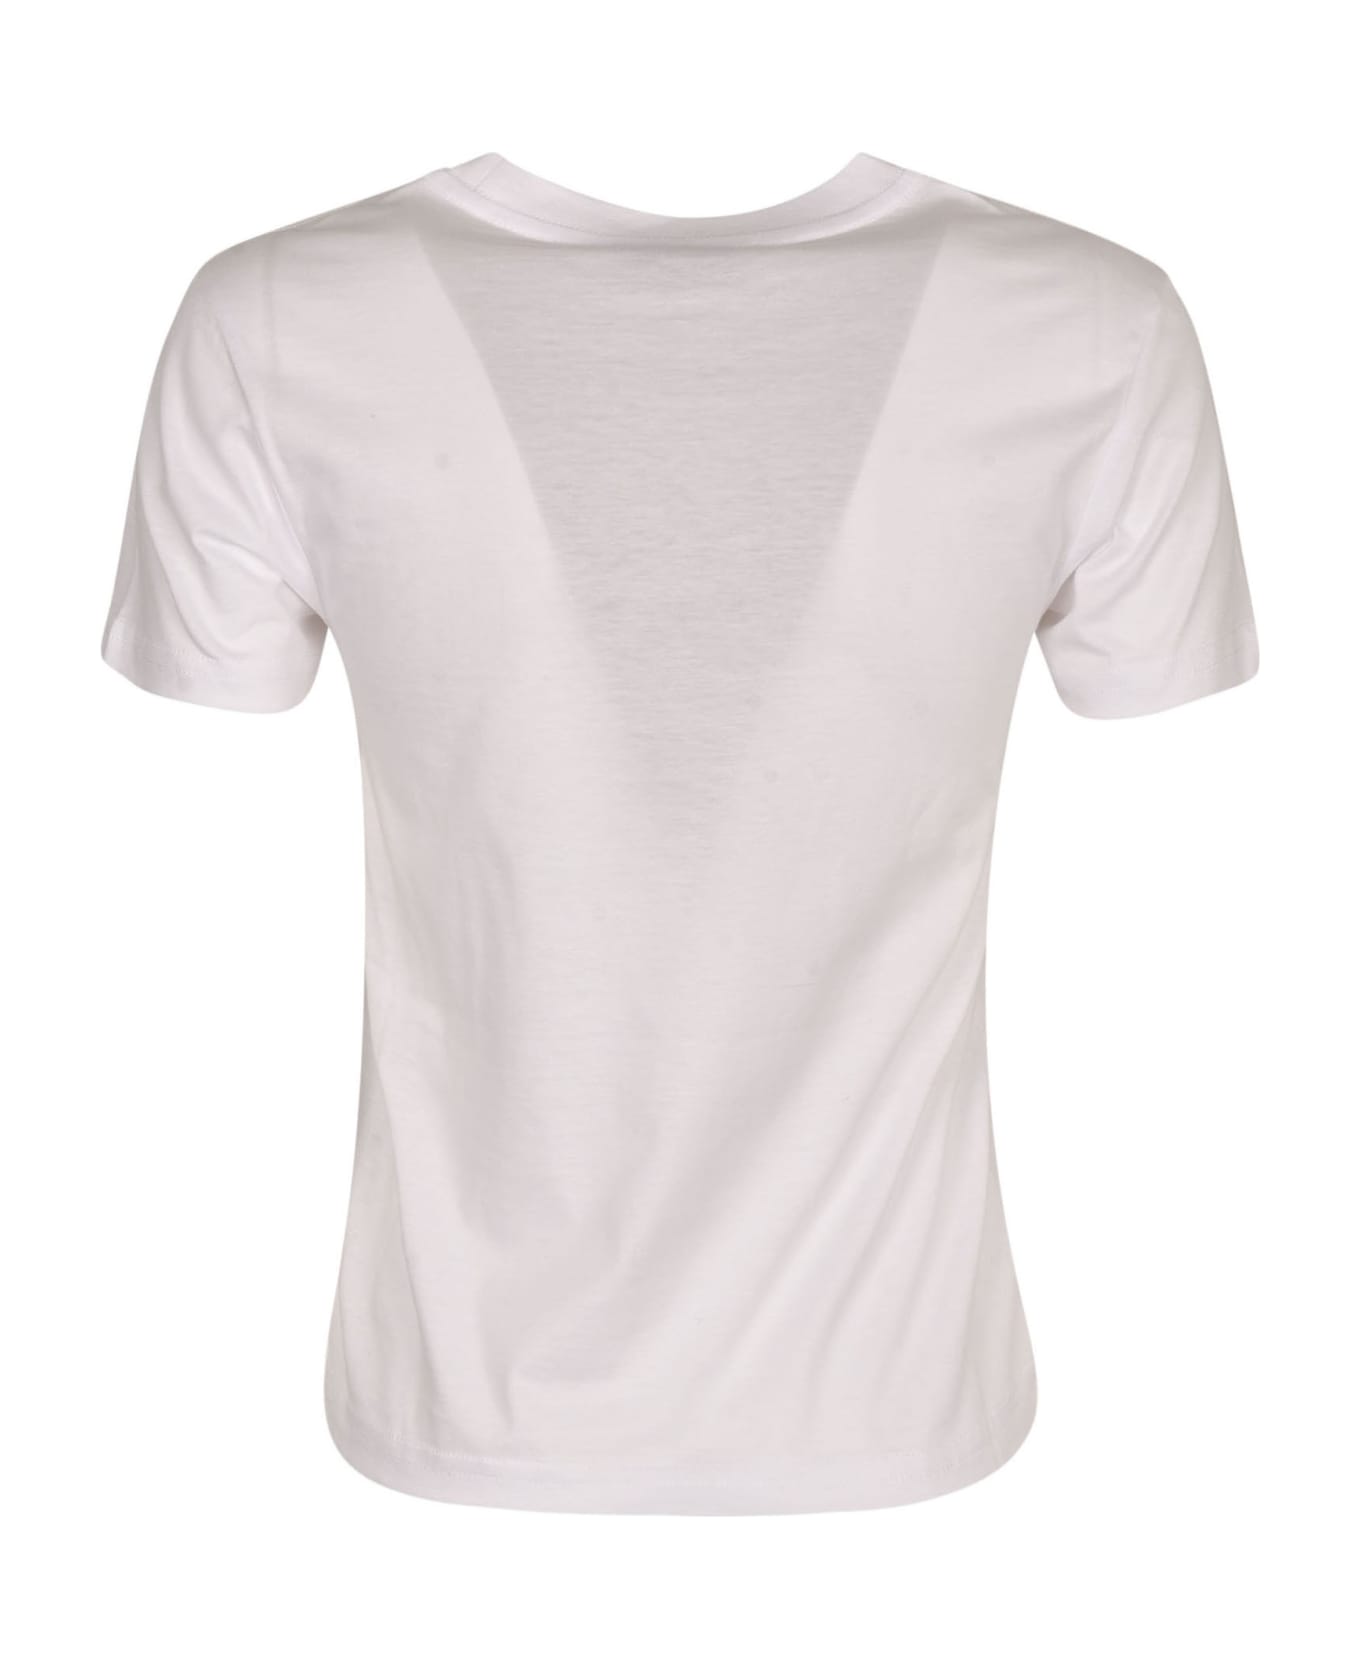 Lanvin Logo Embroidery T-shirt - Optic White